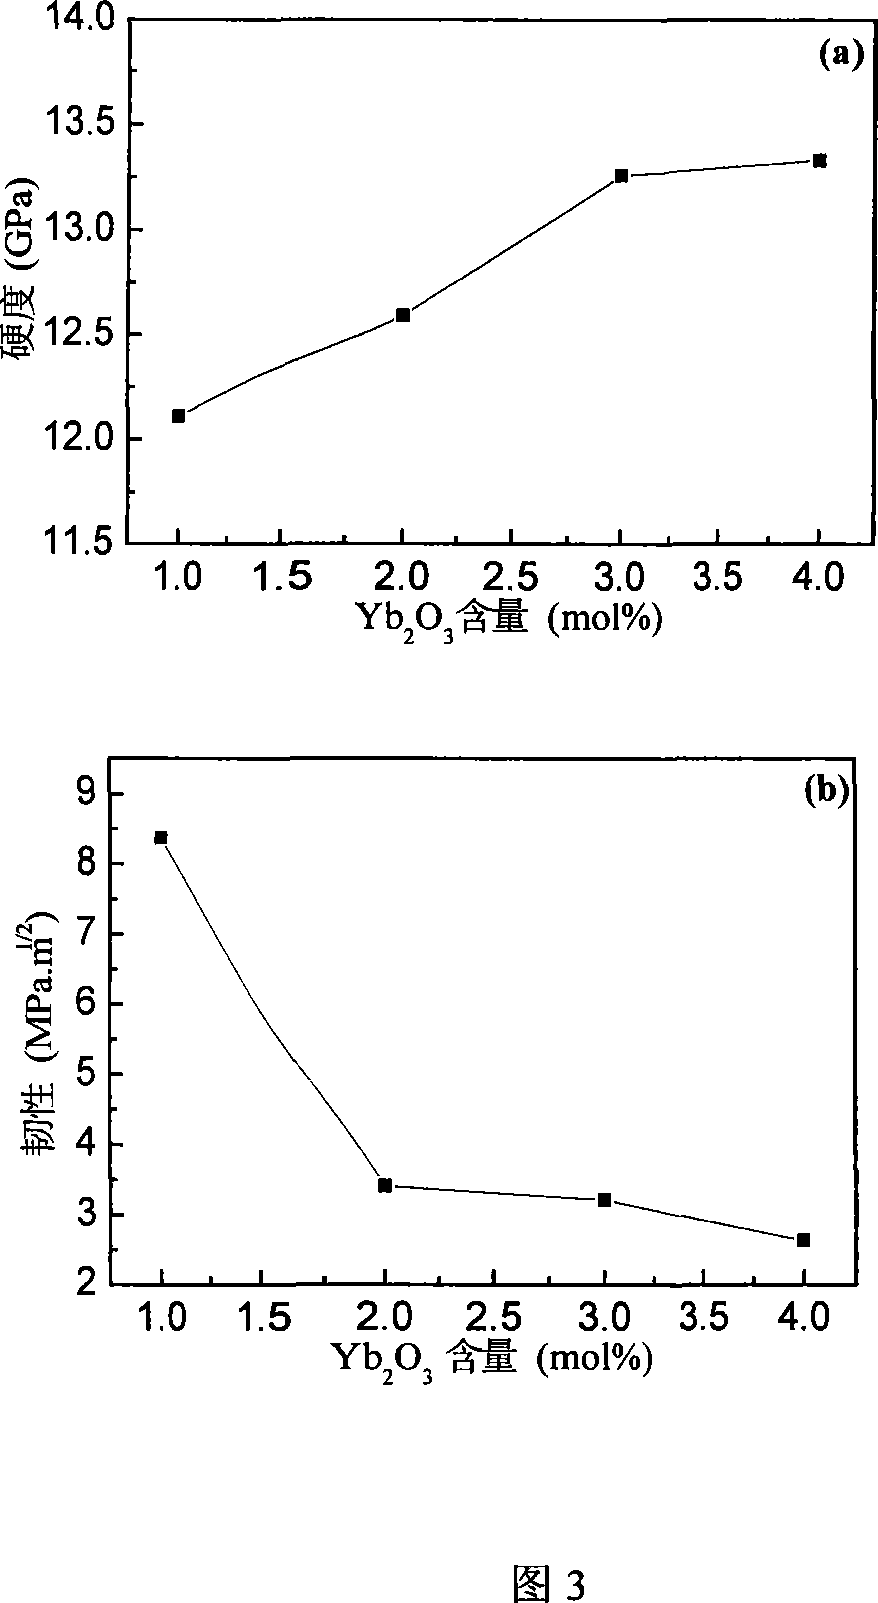 Zirconium oxide ceramic material of ytterbium oxide and yttrium oxide costabilize